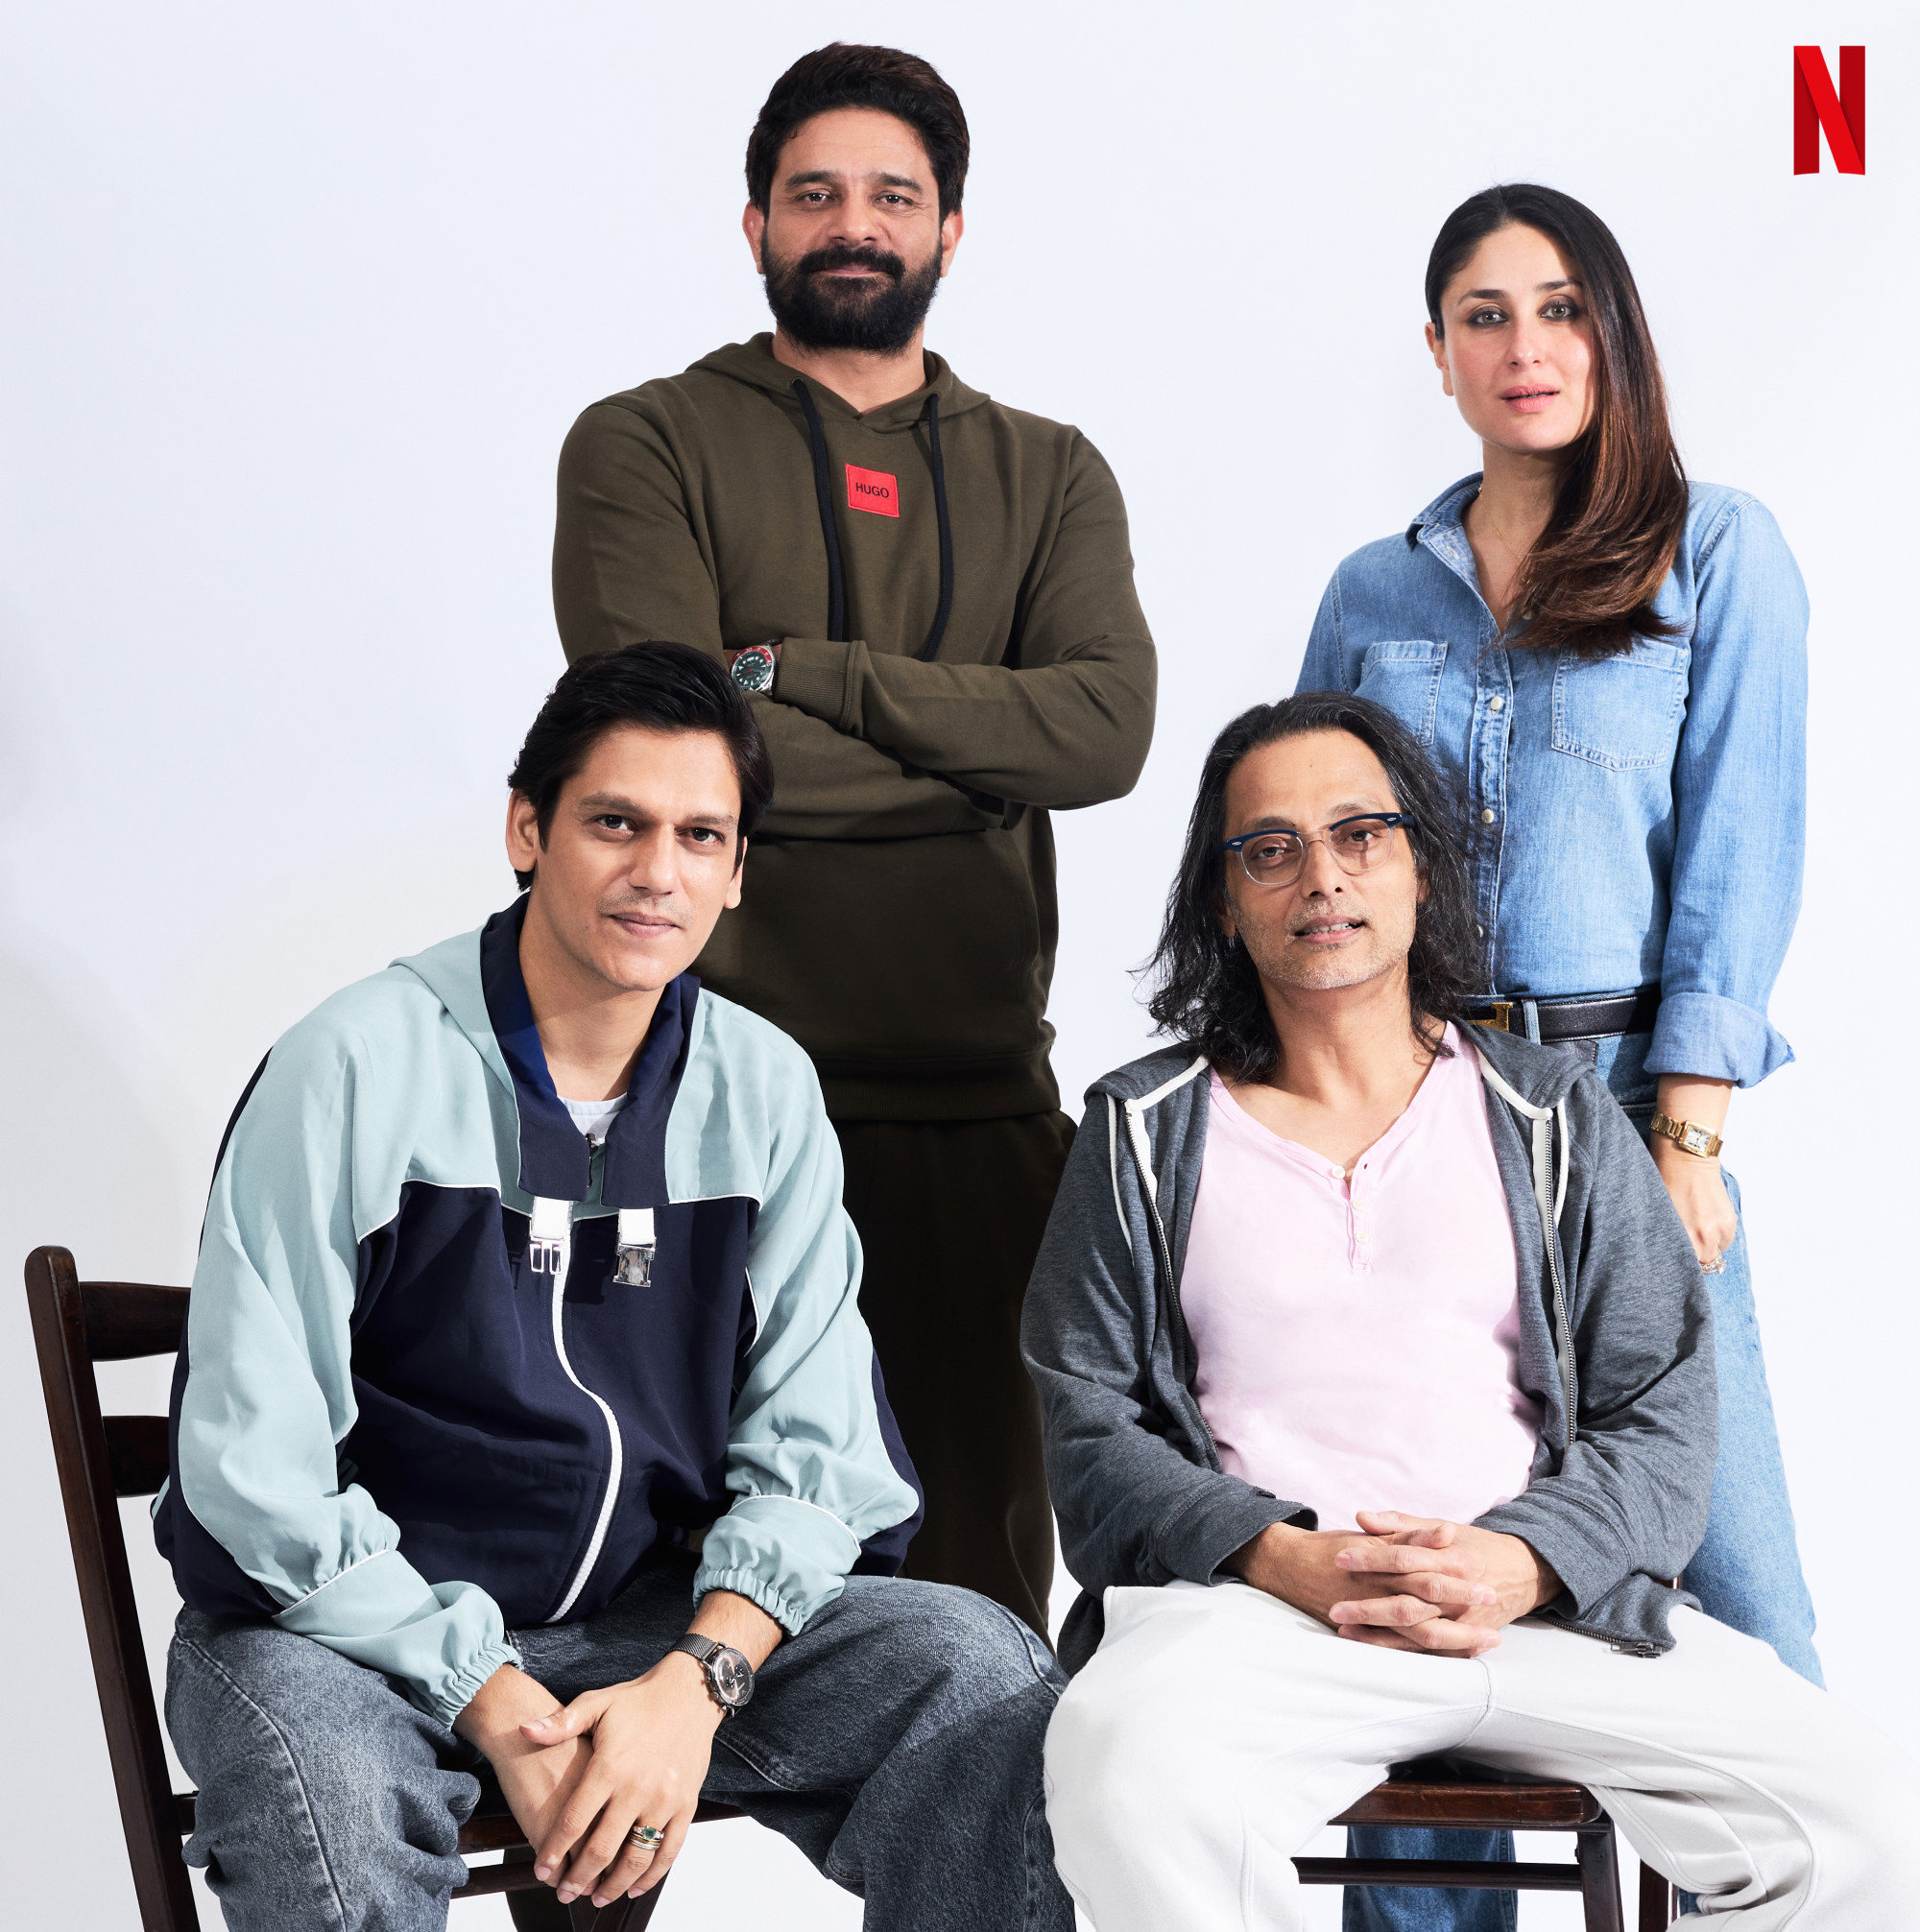 Kareena Kapoor Xx Videos - Kareena Kapoor Khan to Headline Netflix's Upcoming Film - About Netflix